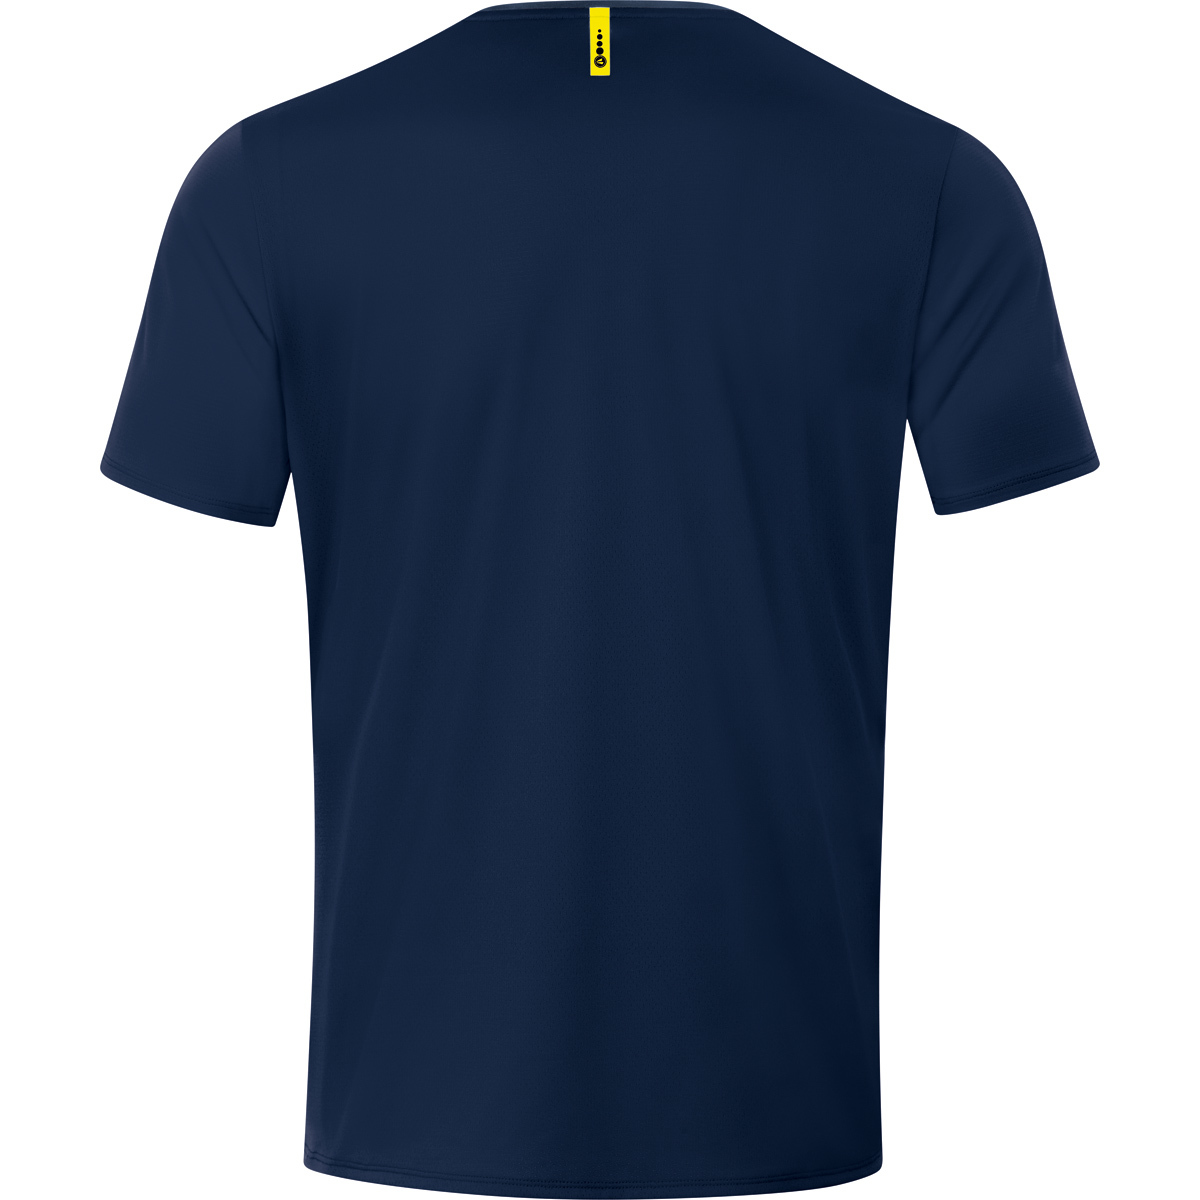 JAKO T-Shirt Herren, S, marine/darkblue/neongelb, Gr. 2.0 6120 Champ